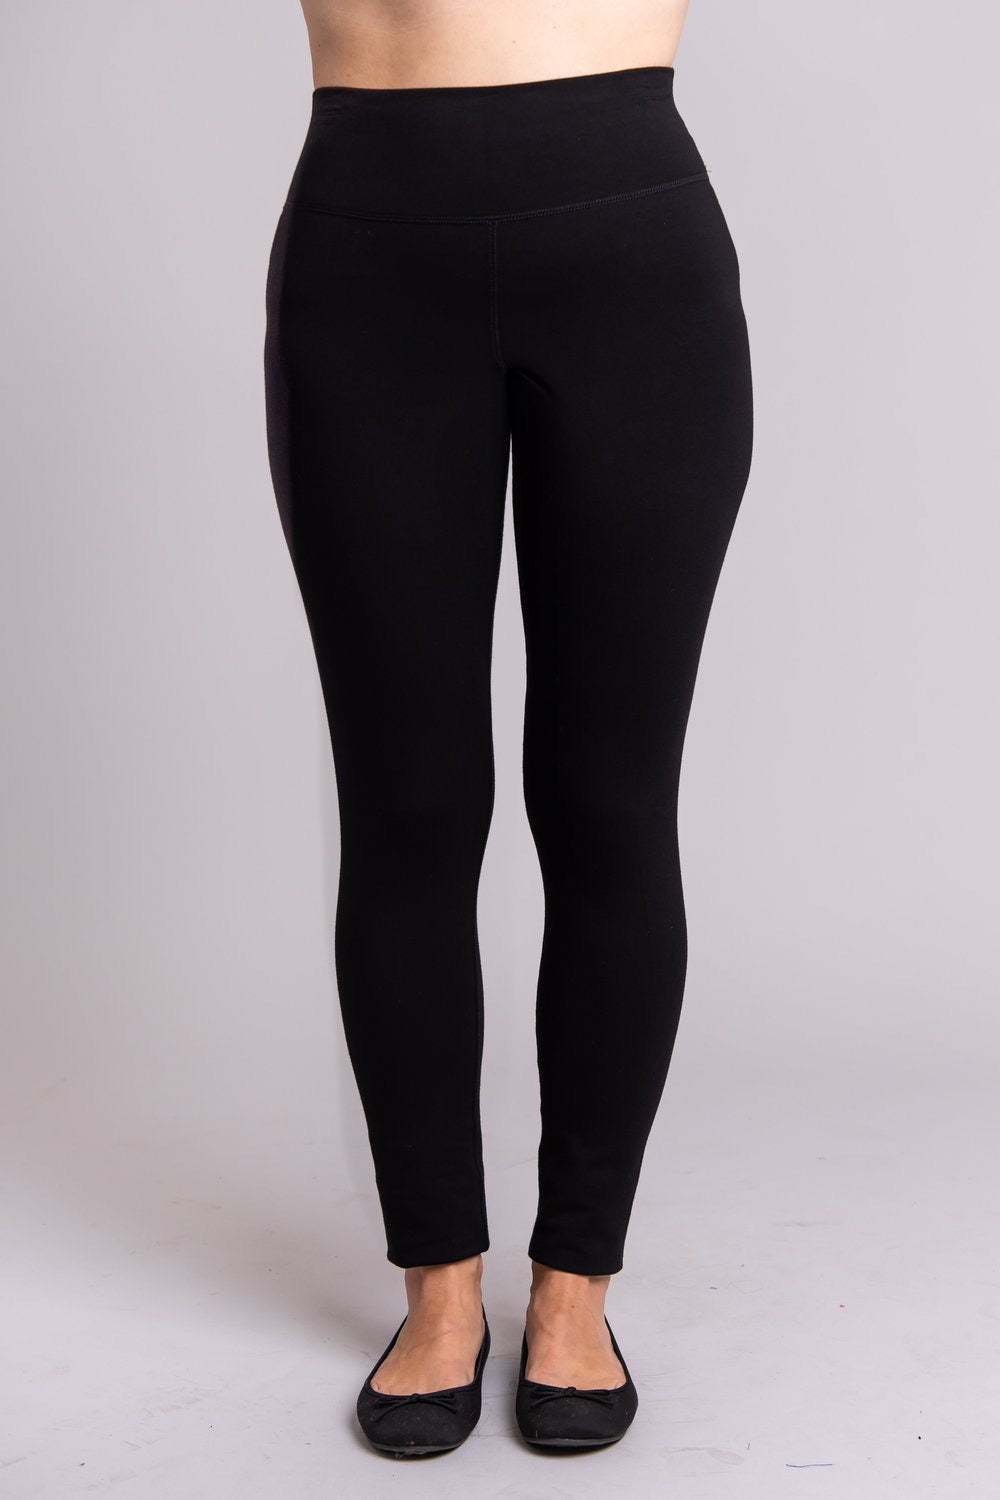 Girlfriend Collective Compressive High-Rise Legging - Globe - Size 3 X –  Sheer Essentials Lingerie & Swimwear